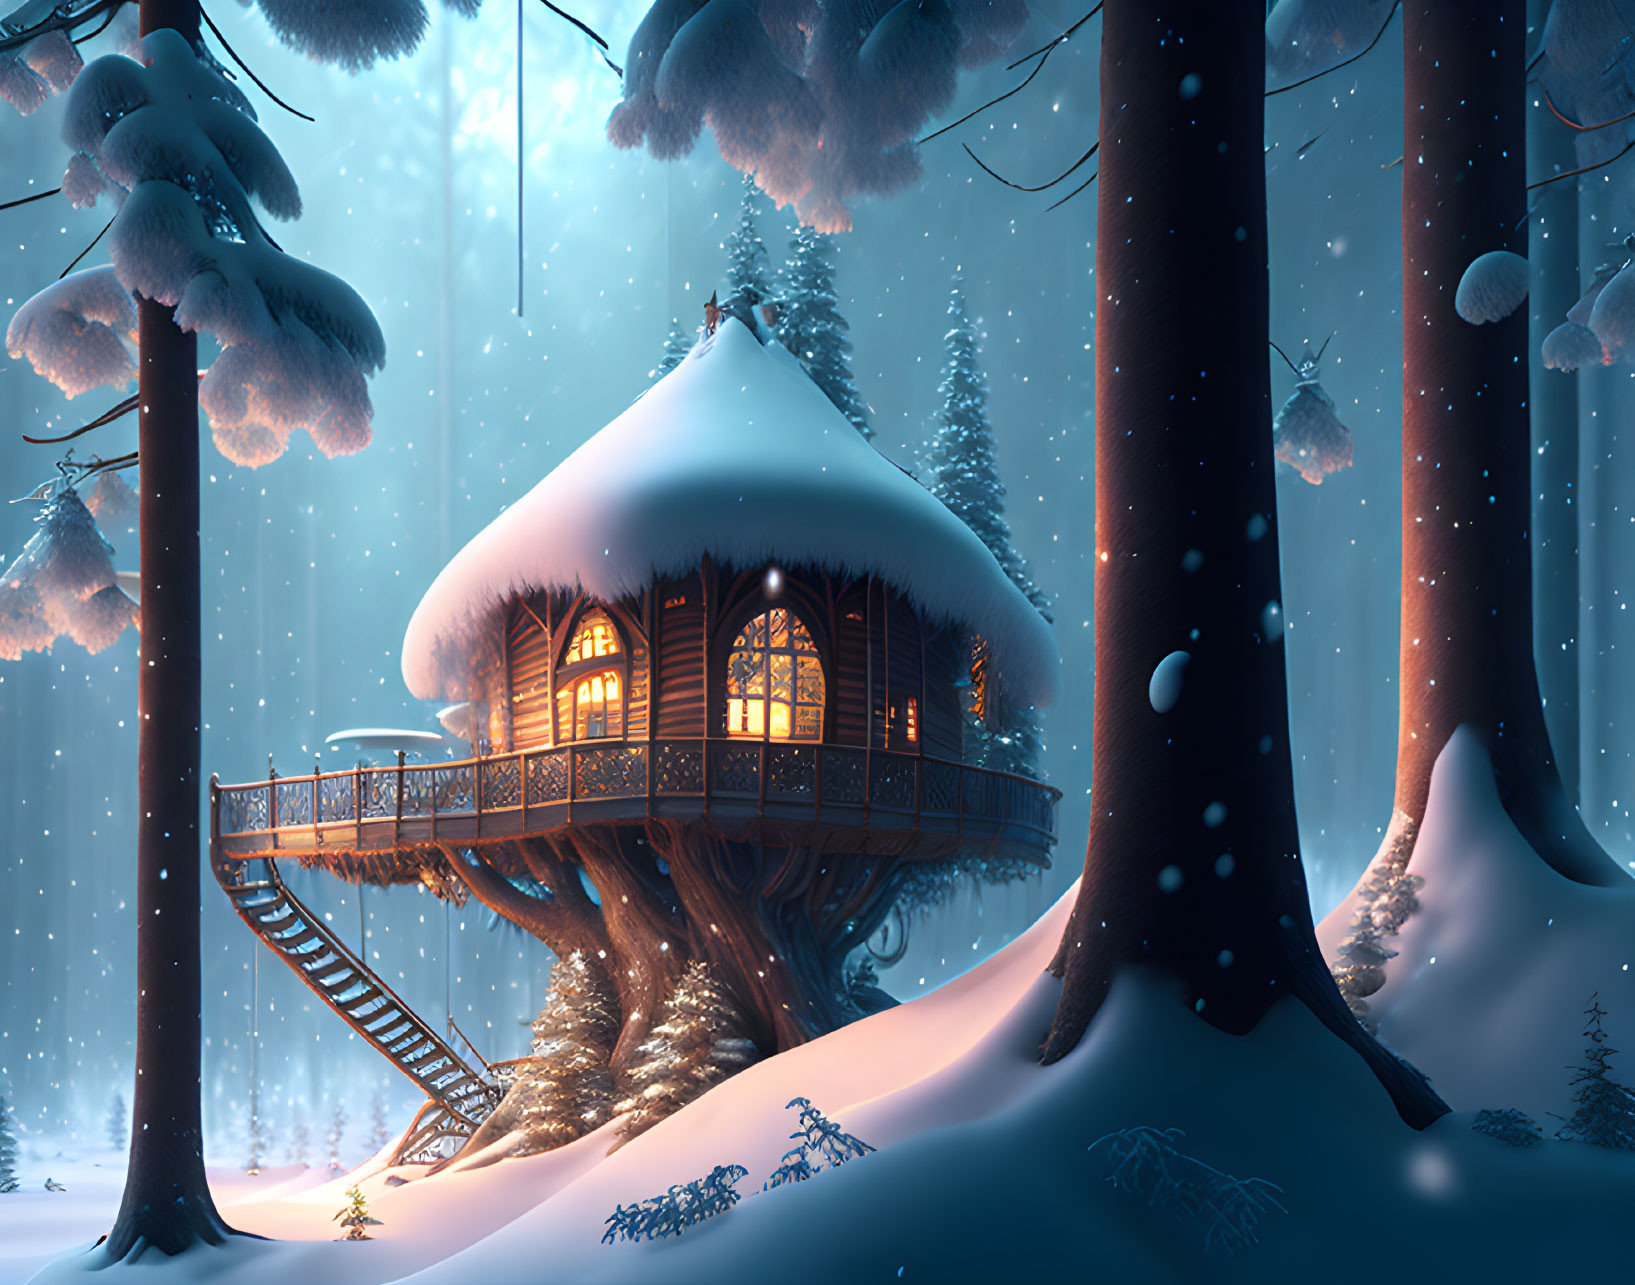 Snowy forest twilight scene: cozy illuminated treehouse in serene setting